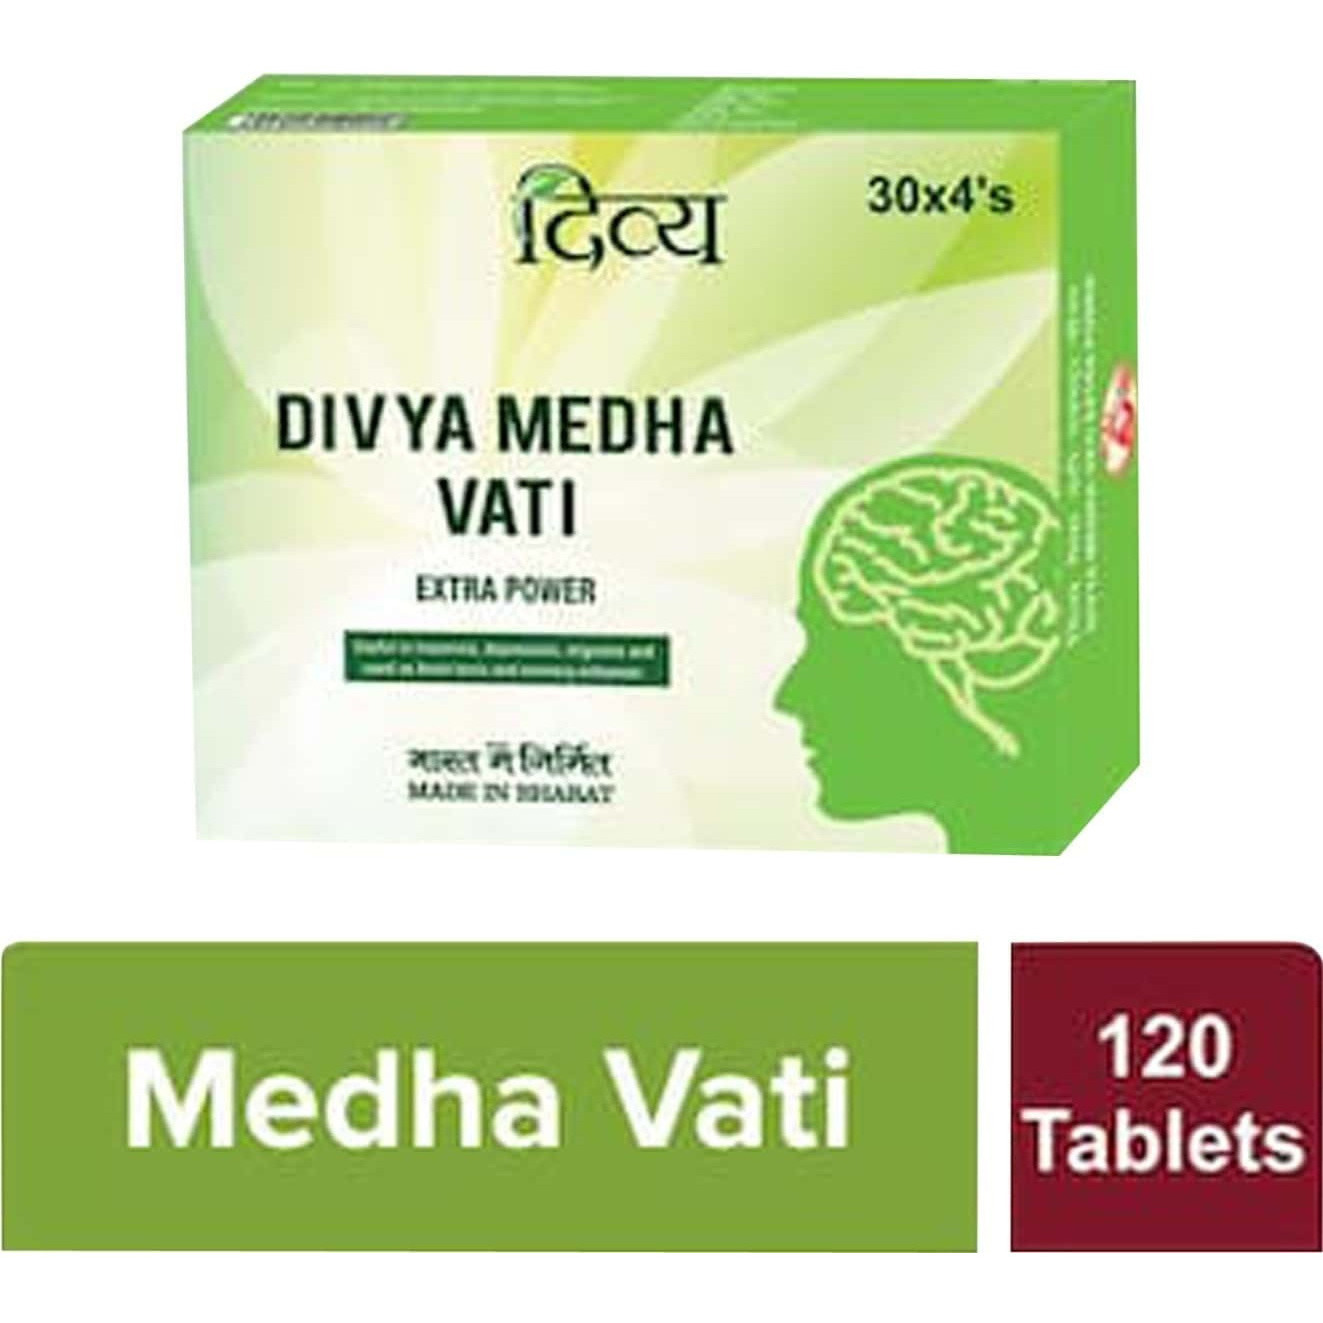 Pack of 4 - Divya Medha Vati Extra Power - 120 Tablets